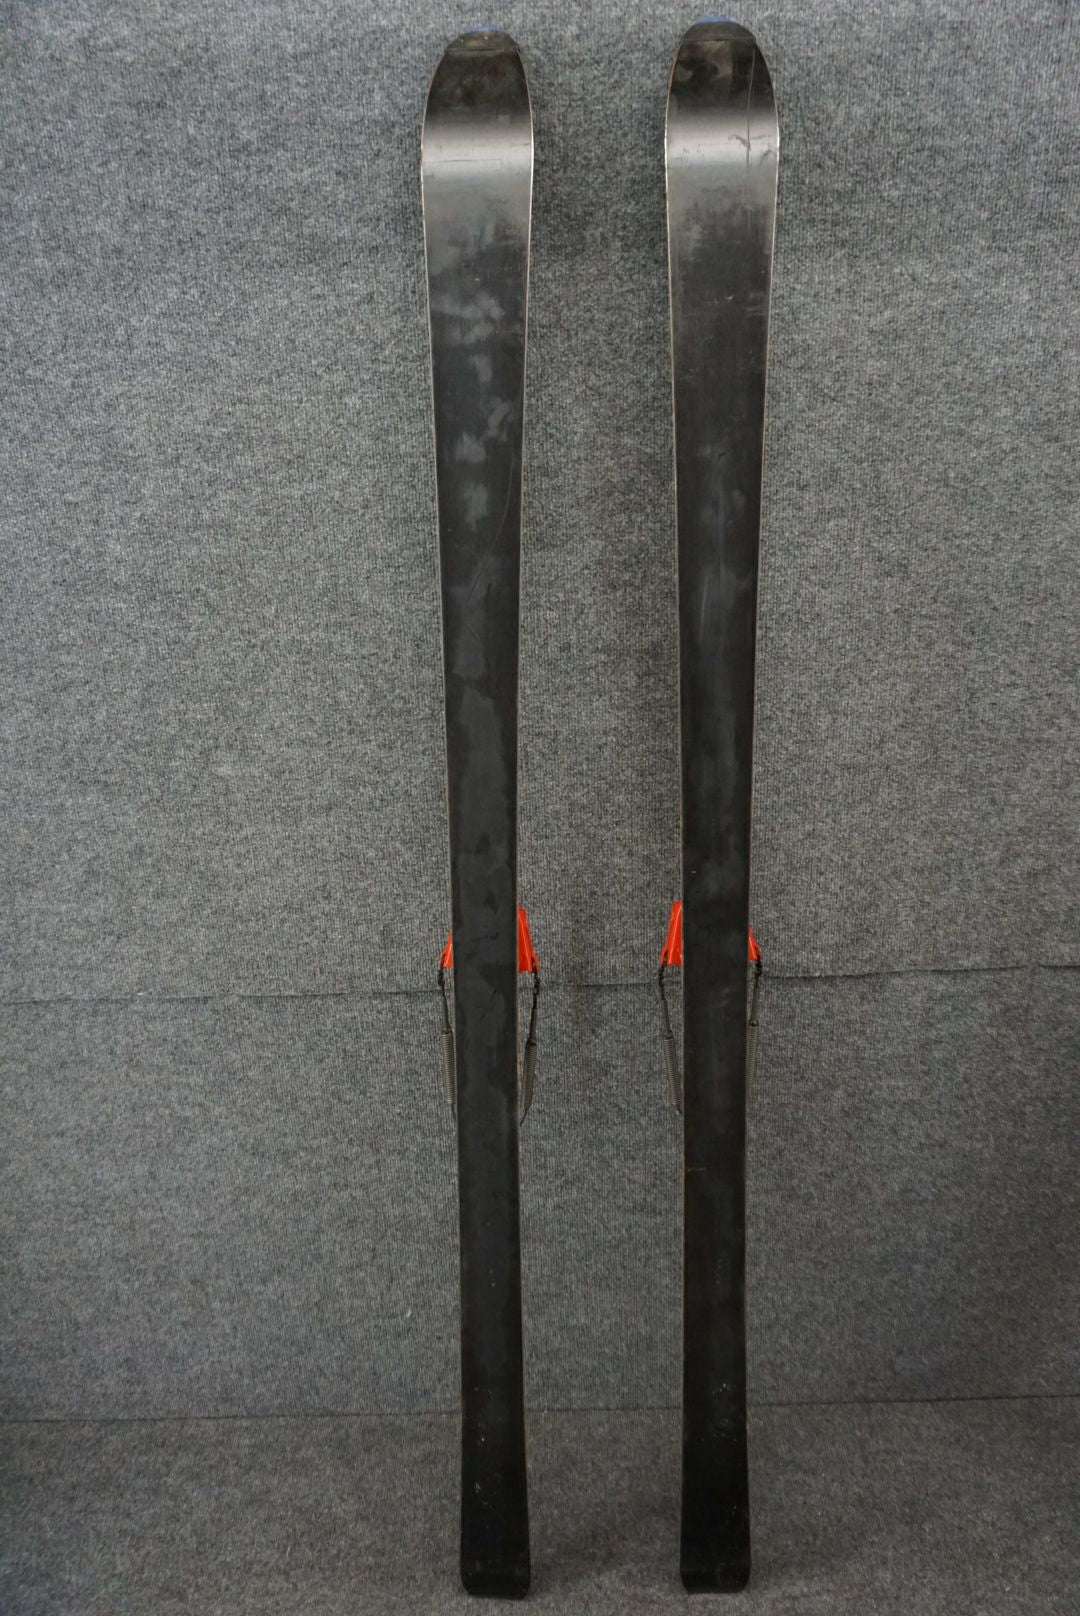 Rossignol Length 184 cm/72.5" Telemark Skis